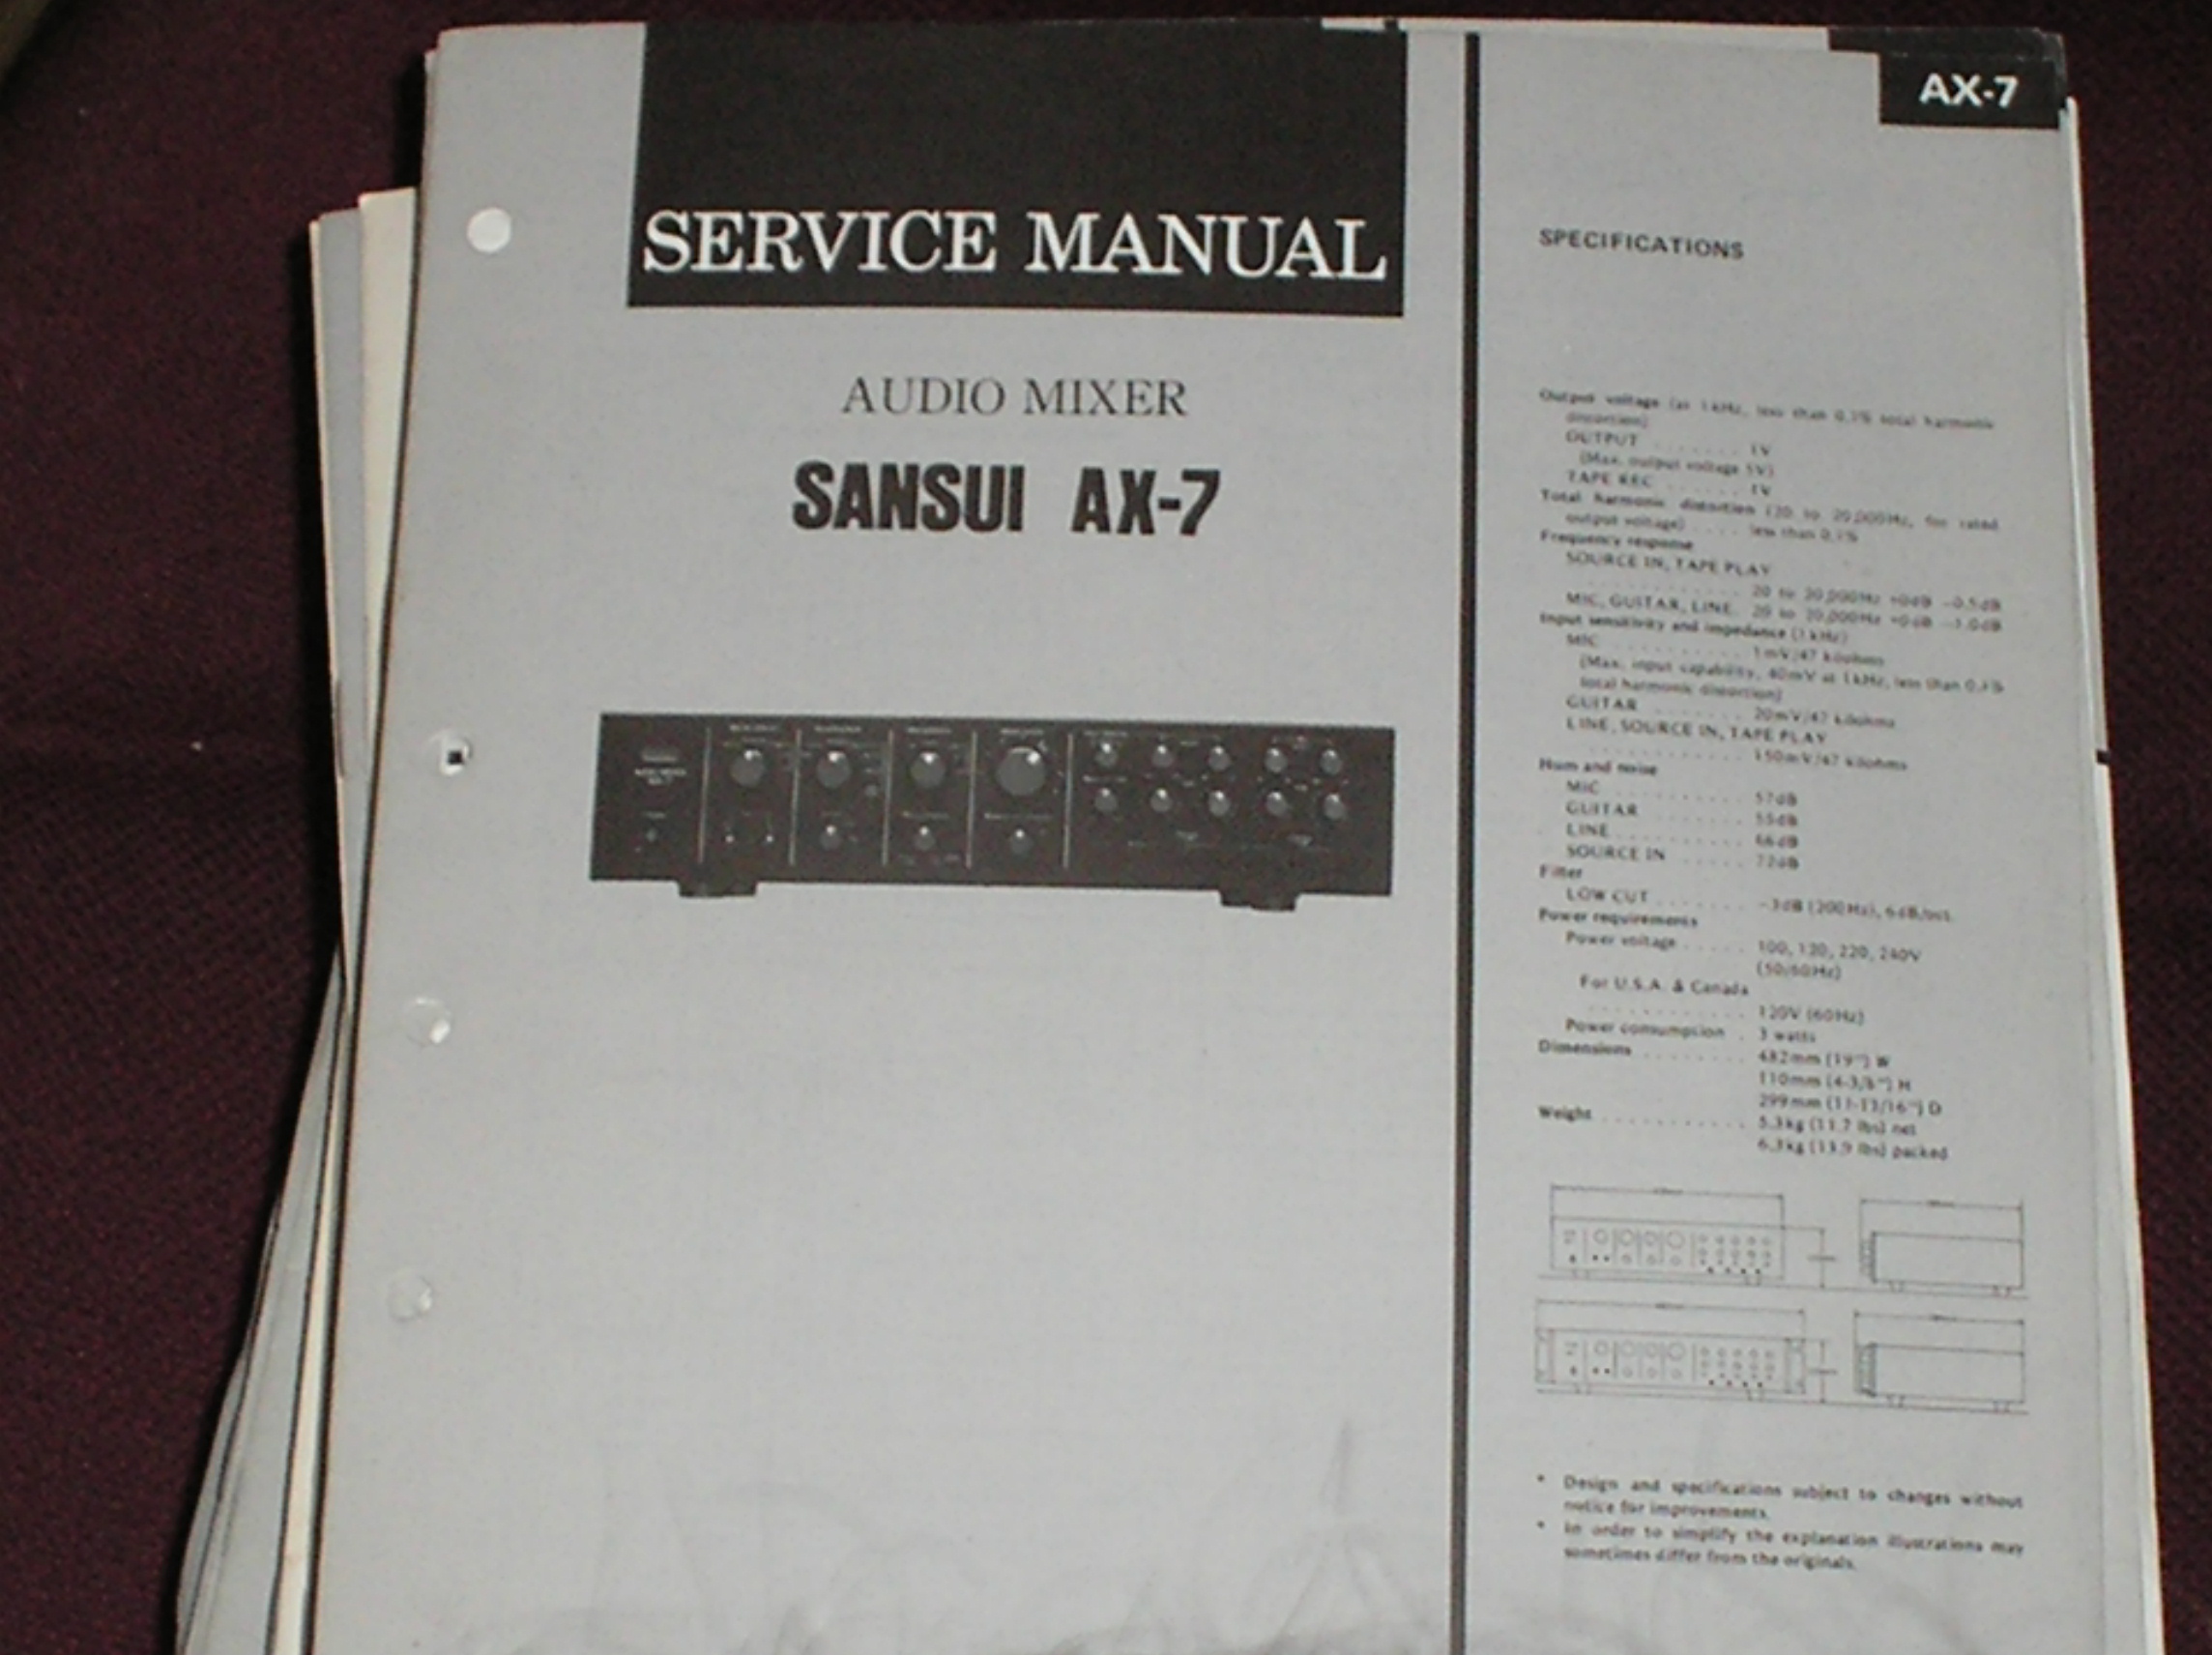 AX-7 Audio Mixer Service Manual